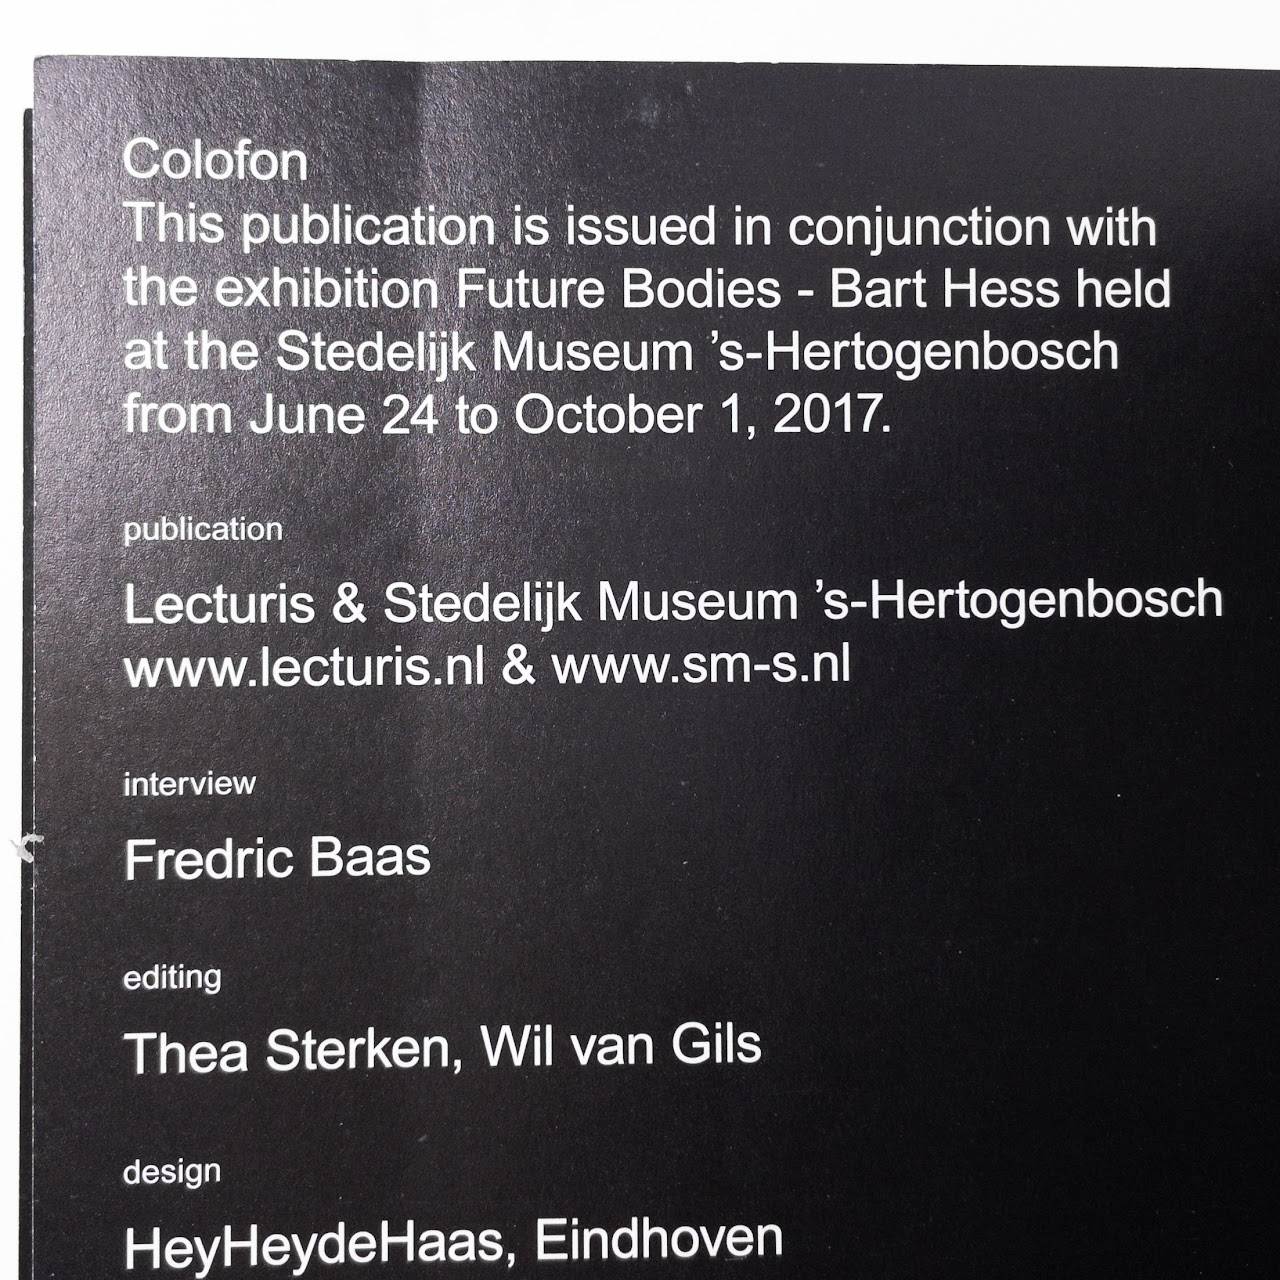 Bart Hess: Future Bodies 2007-2017 Exhibition Book